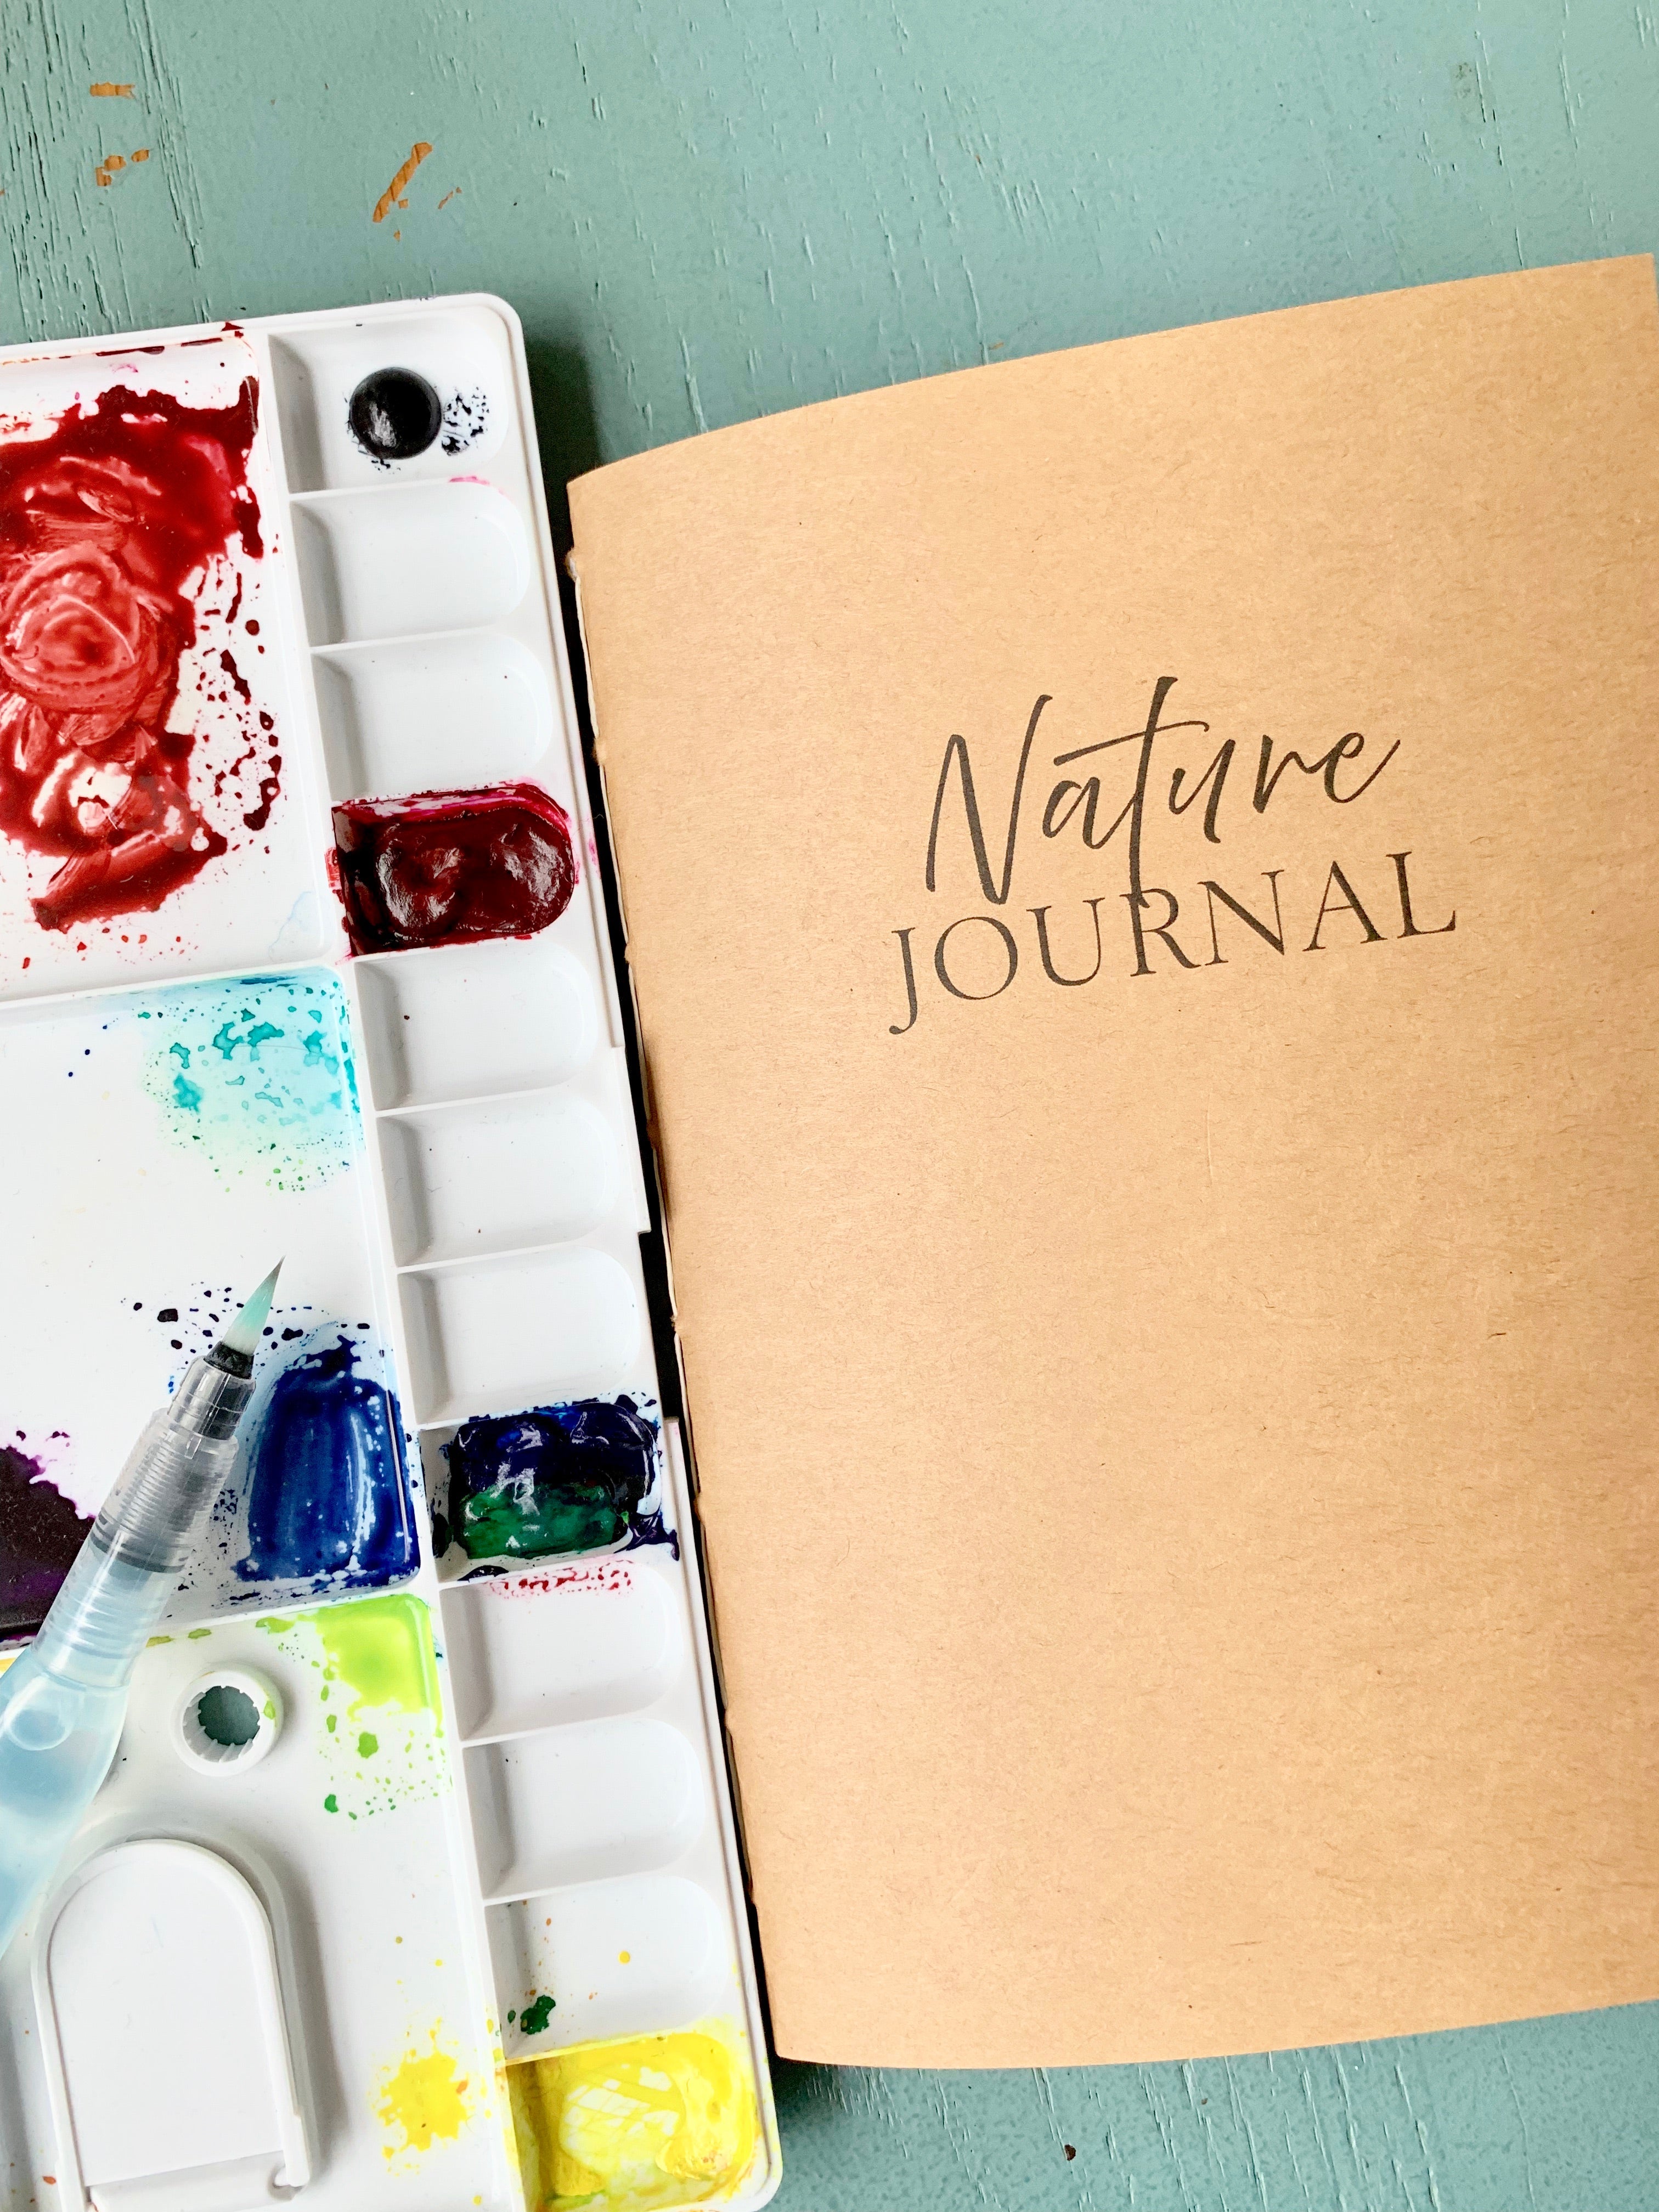 Nature Journaling Supplies: My Picks - Wandering Leaves Studio